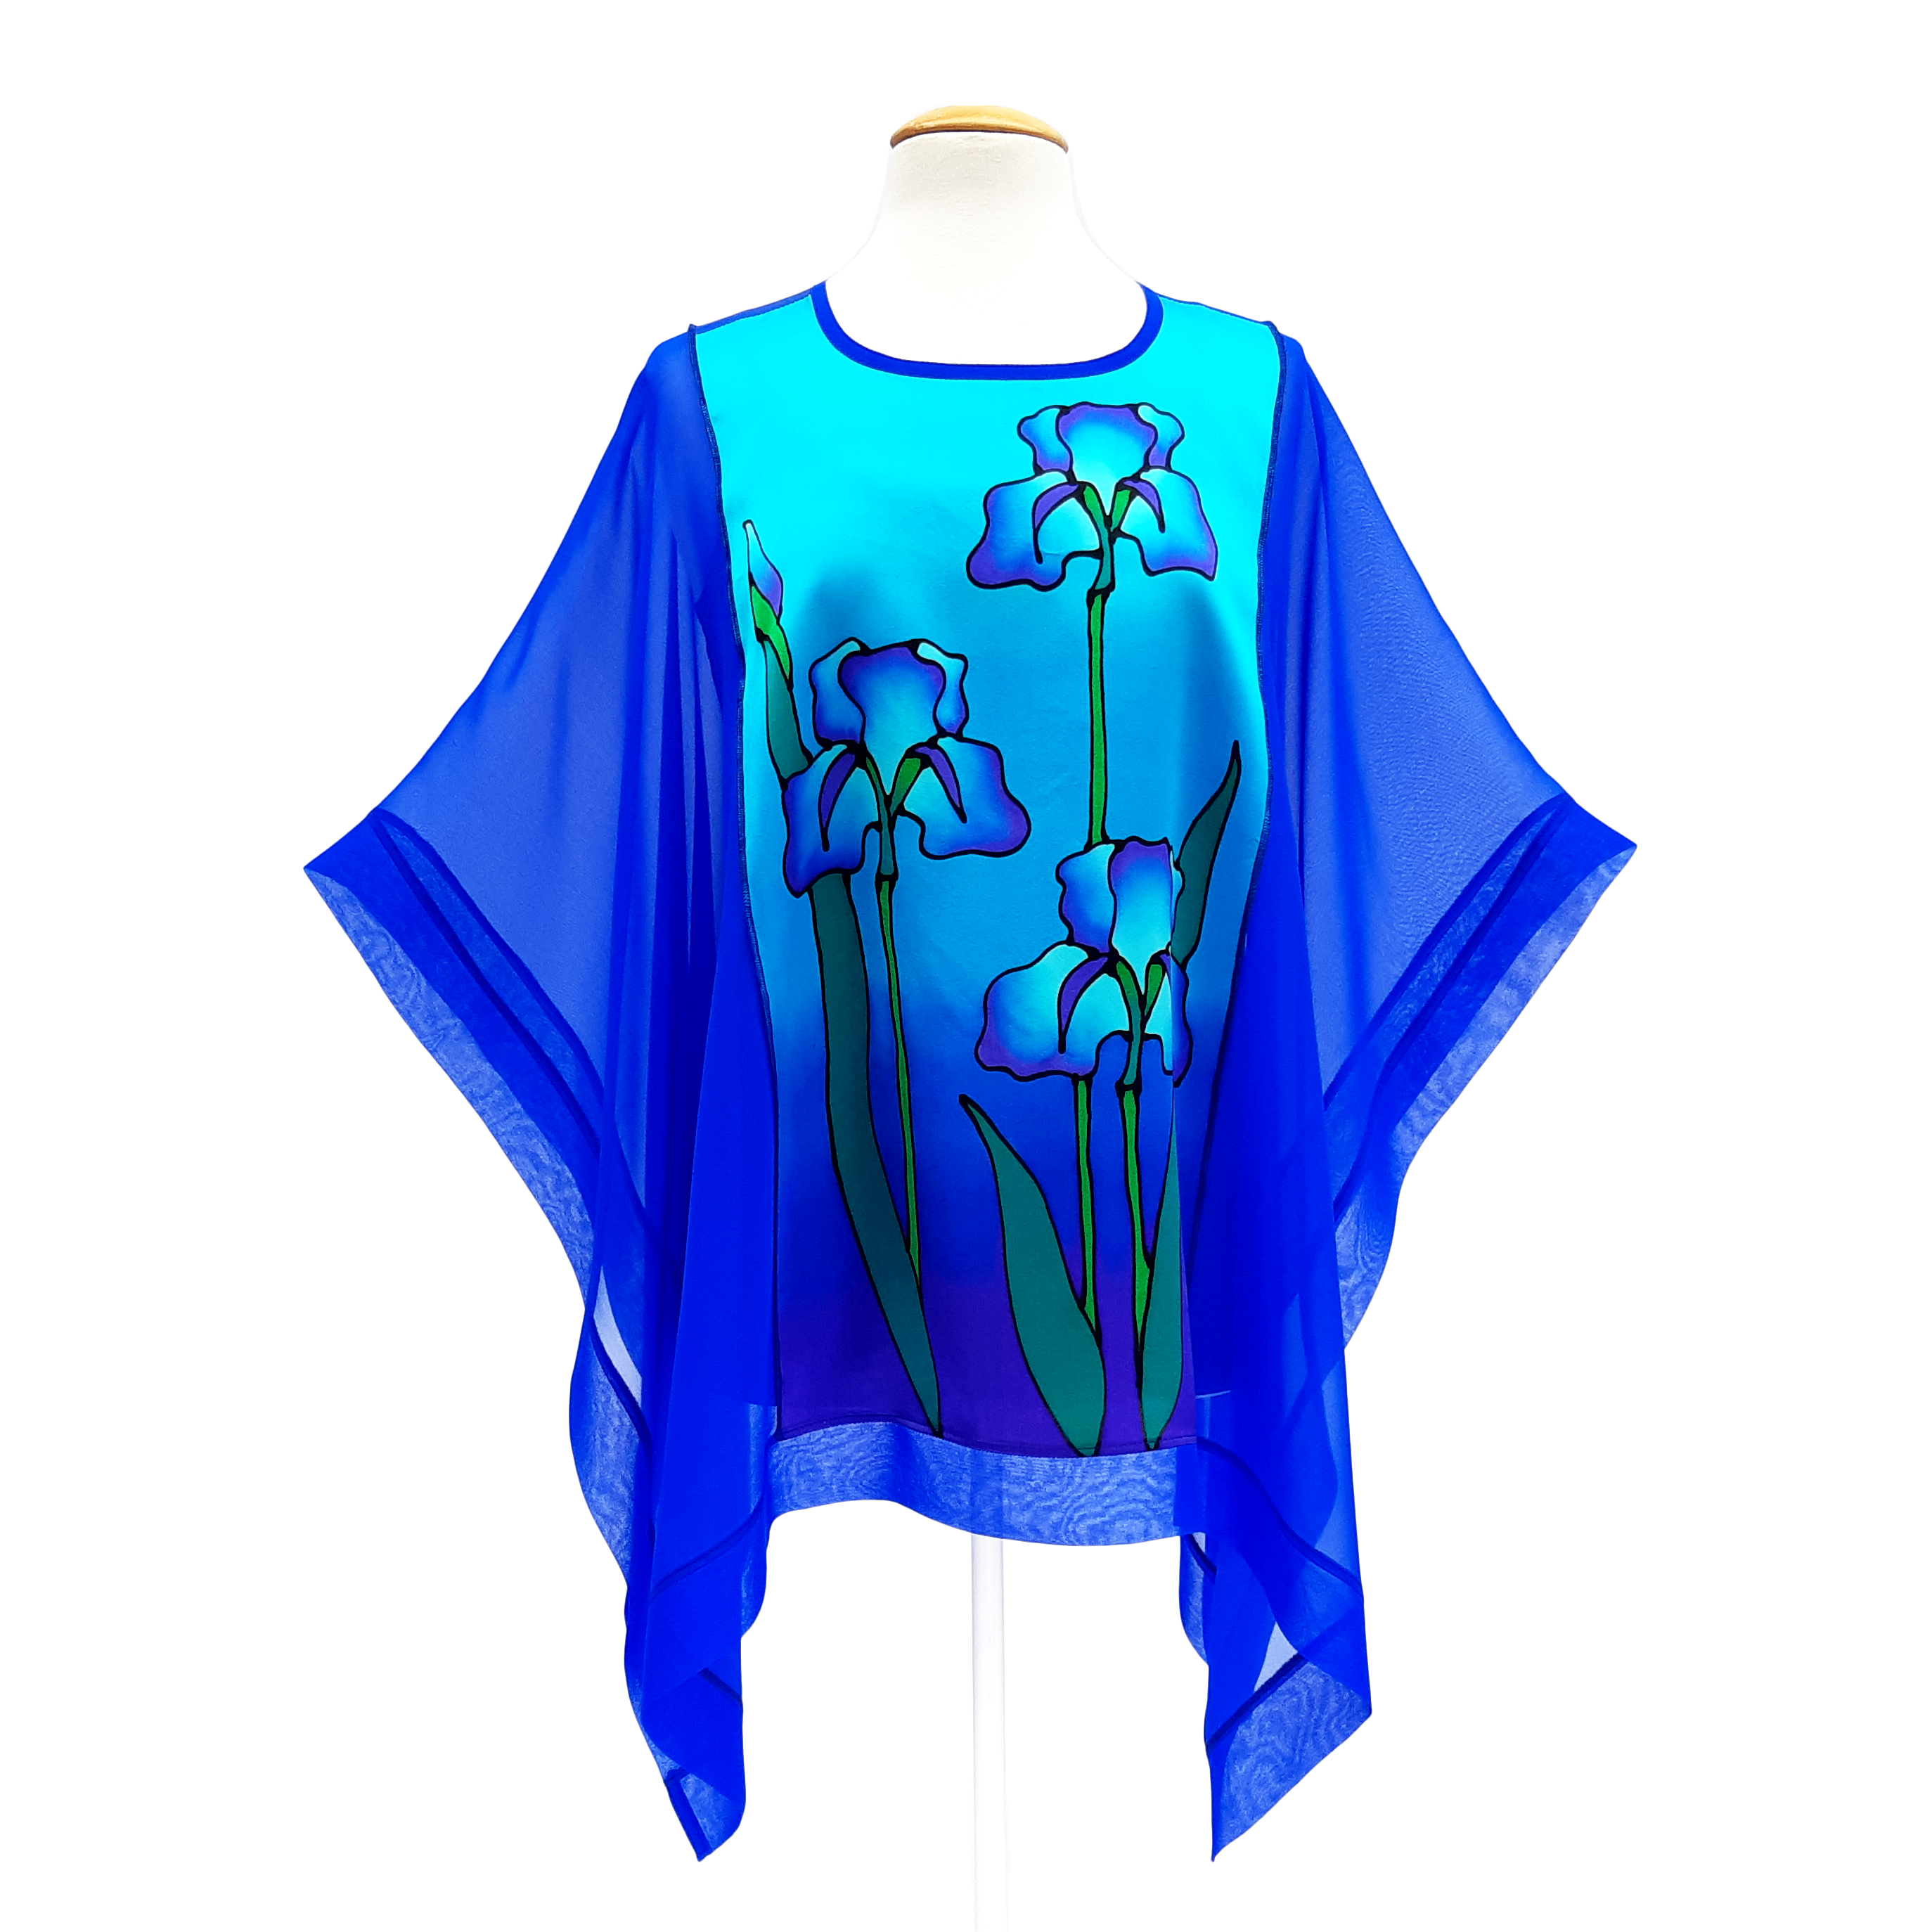 silk clothing hand painted blue iris design art poncho top handmade by Lynne Kiel